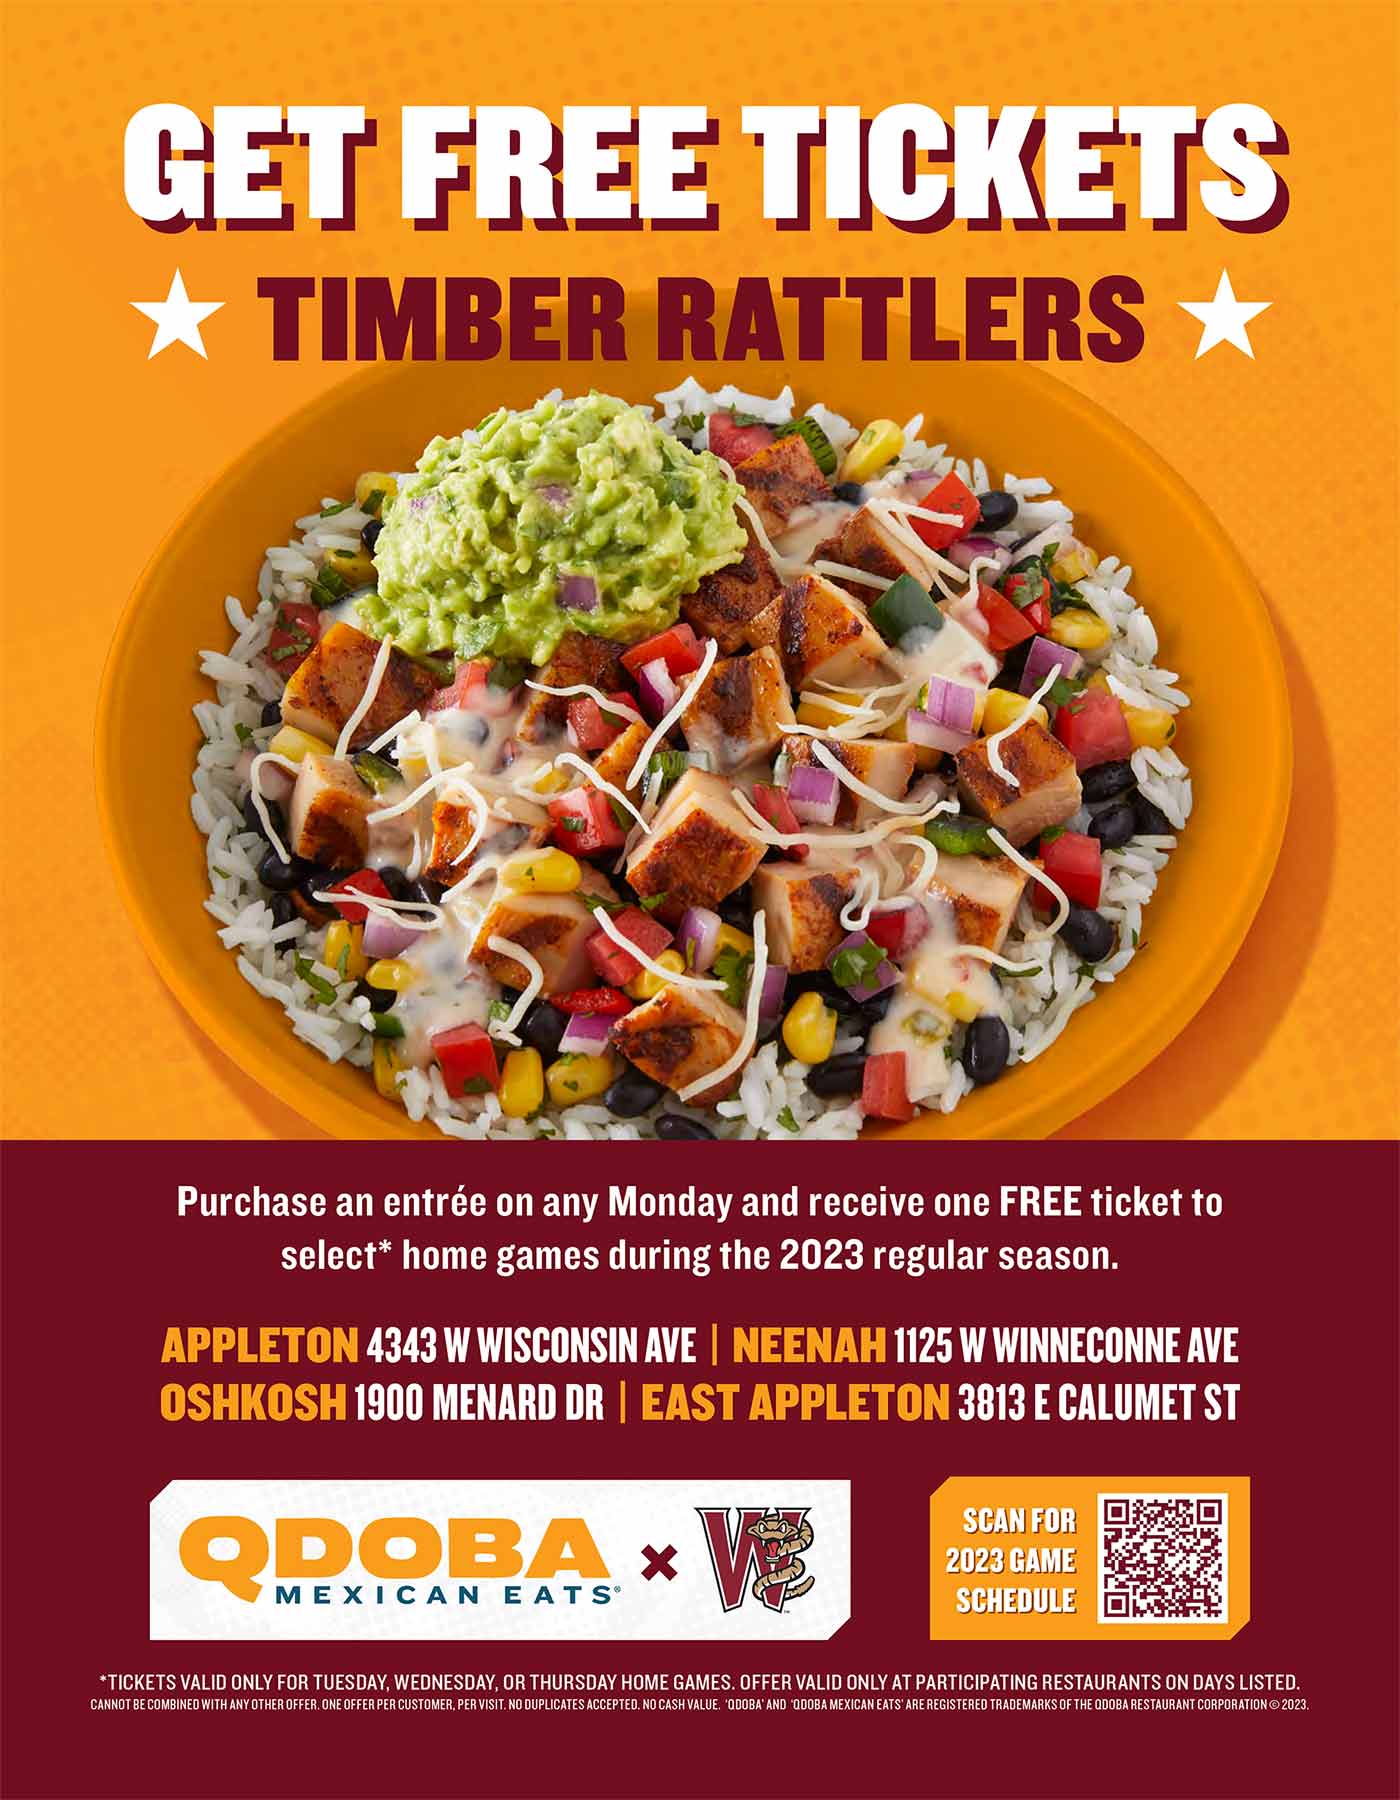 QDOBA Timber Rattlers Promotion Details